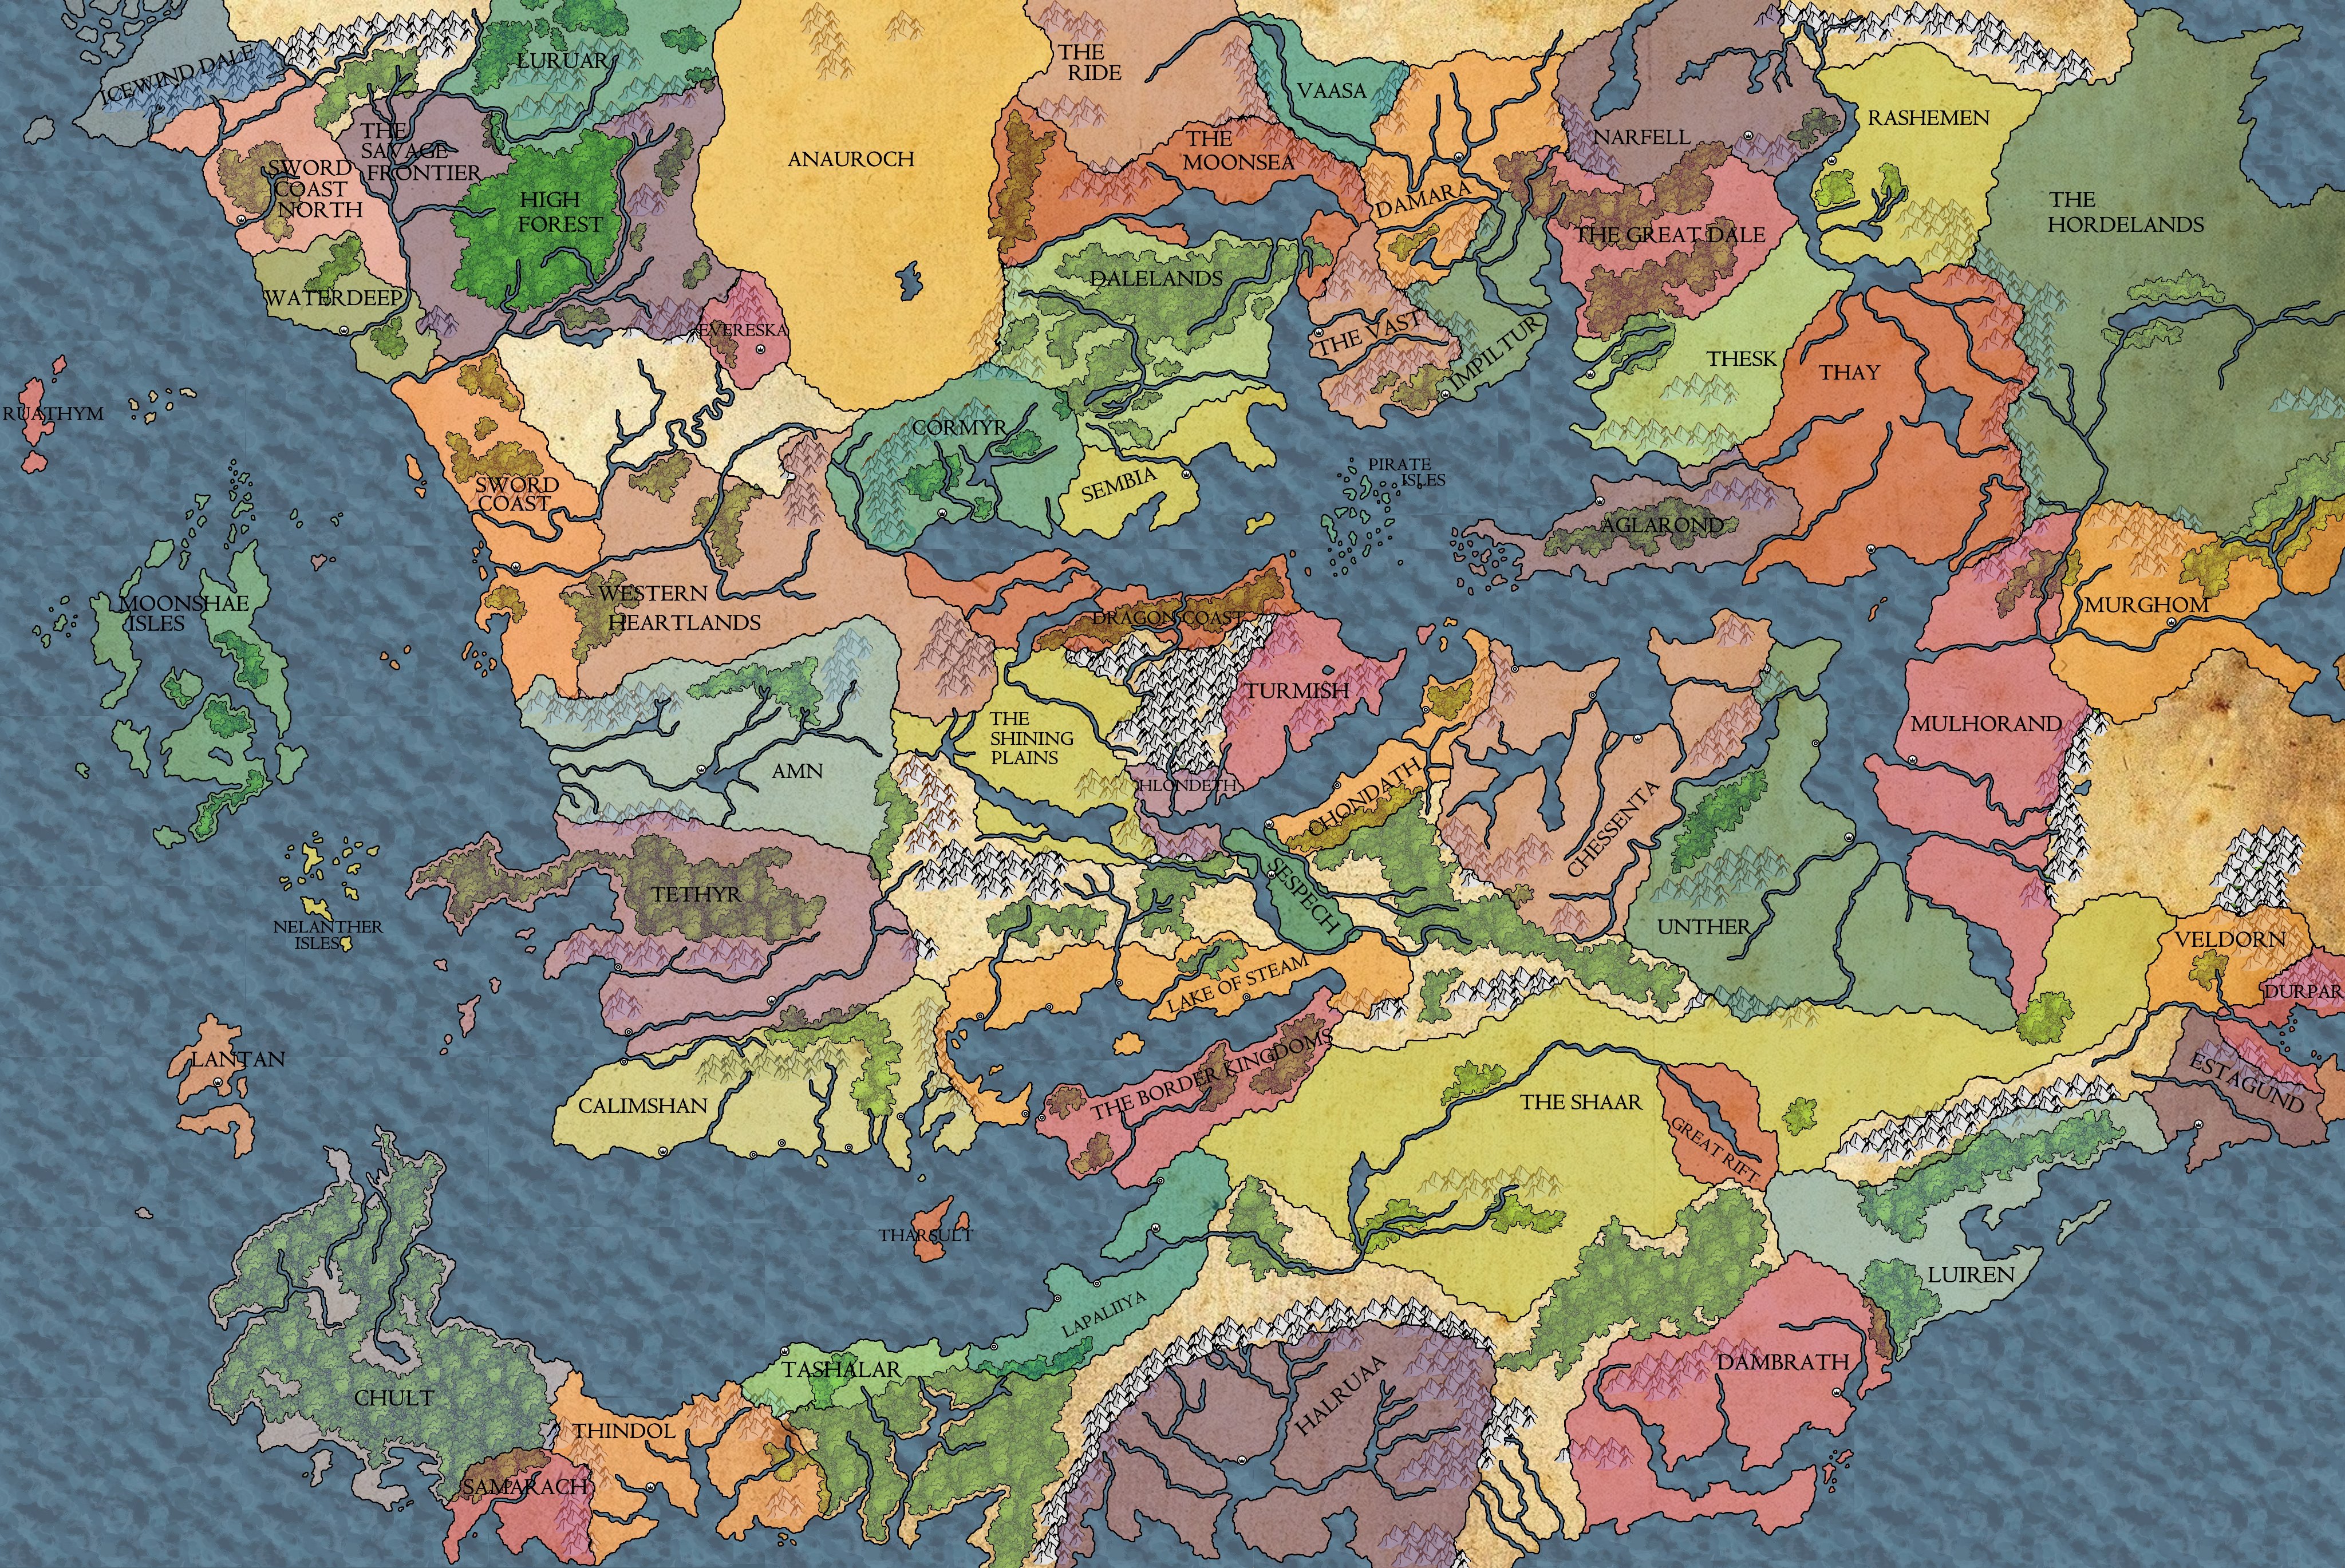 M.T. Black on Twitter: "A wonderful political map of Faerûn by Viktor ...